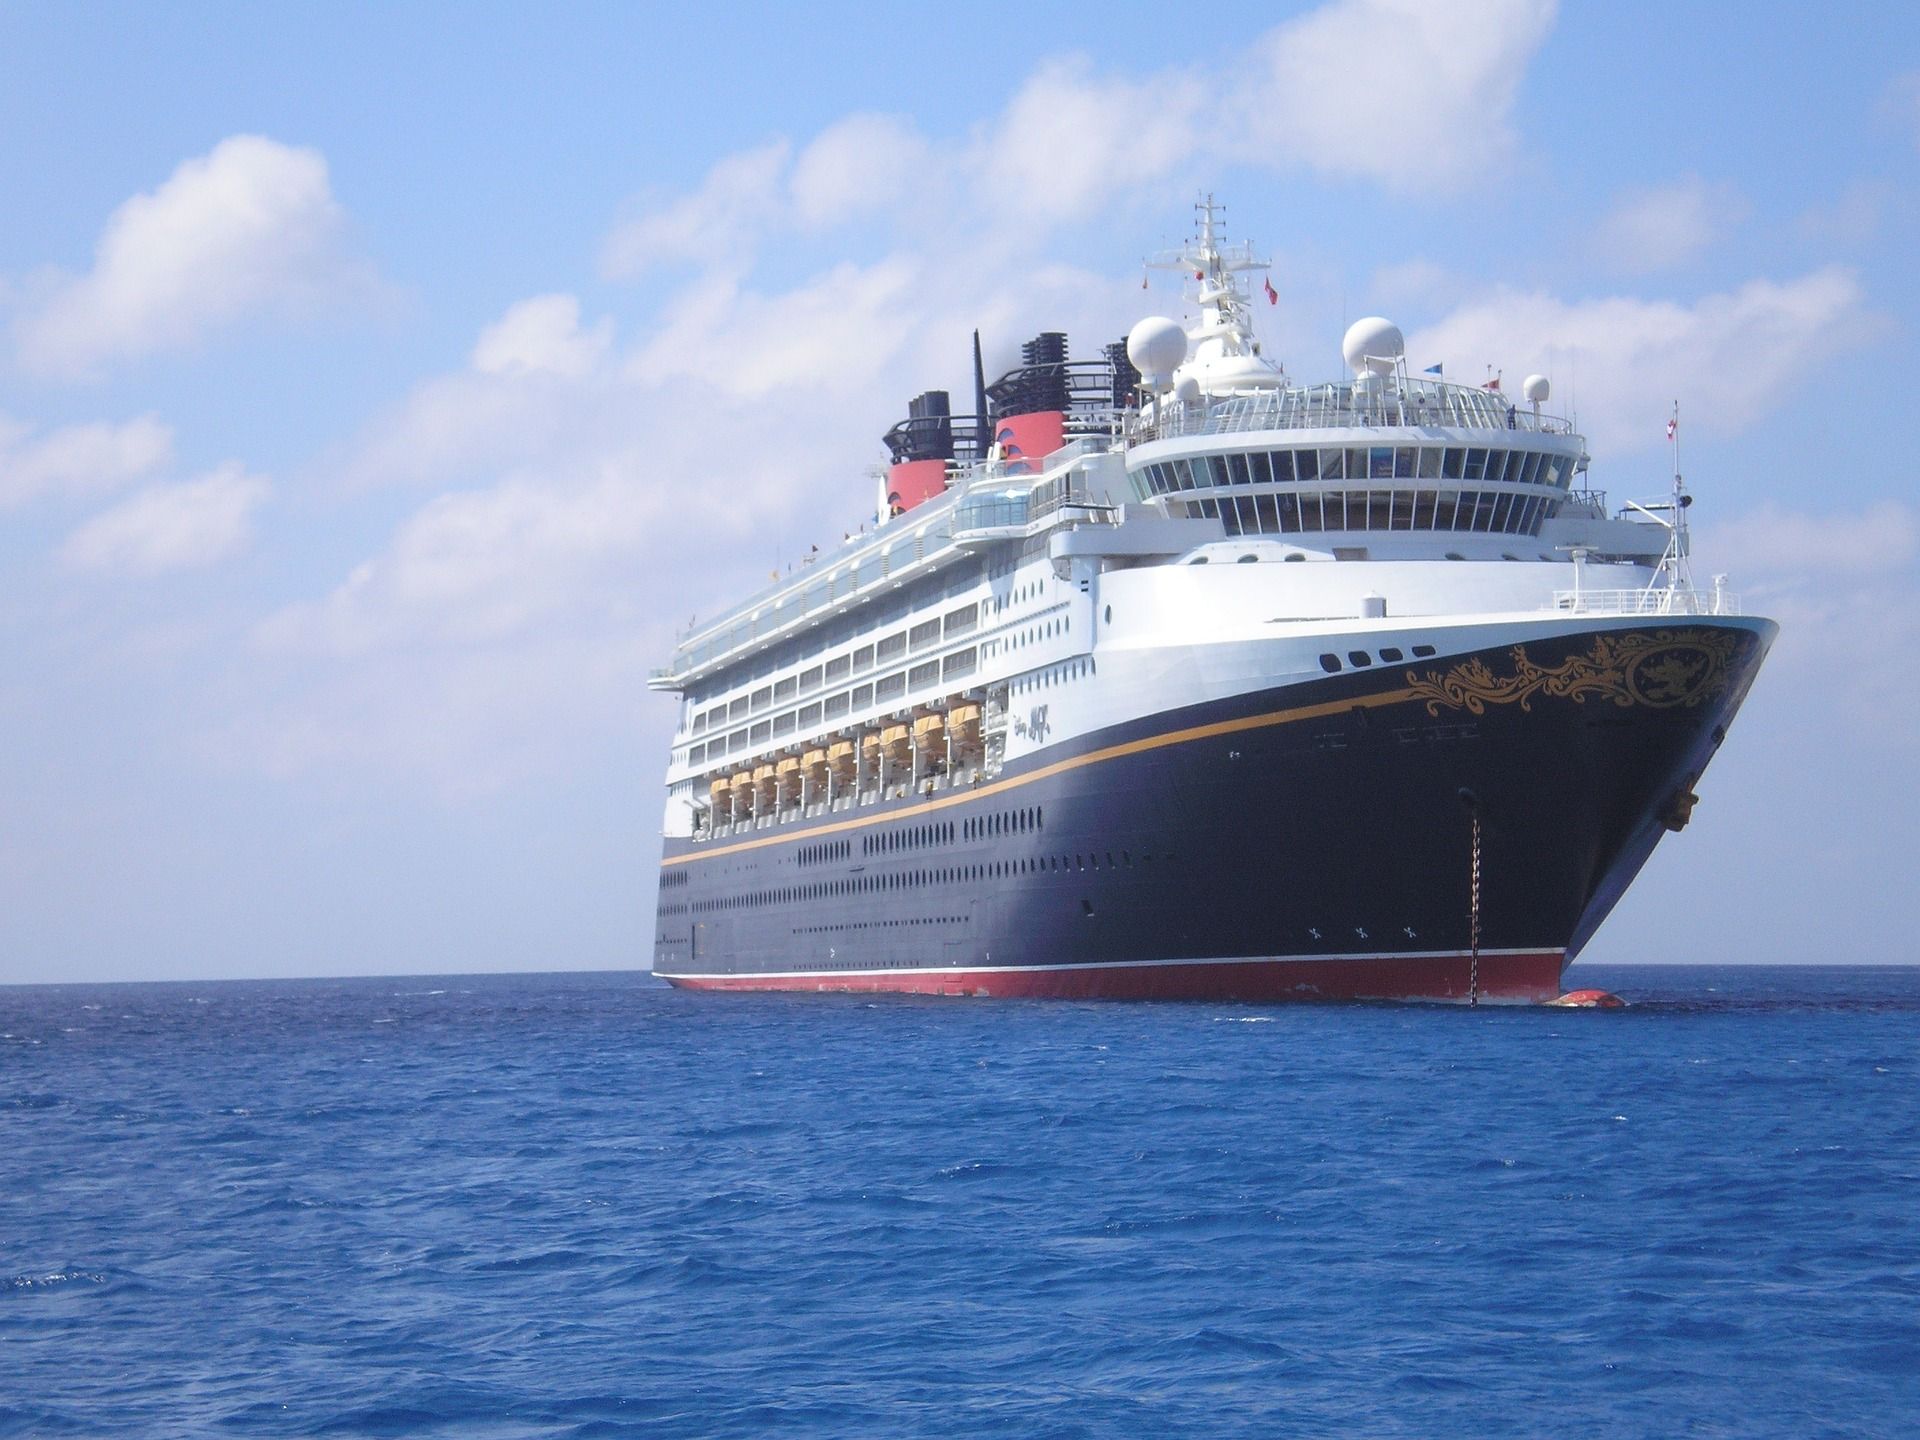 Disney cruise line ship near the cayman islands